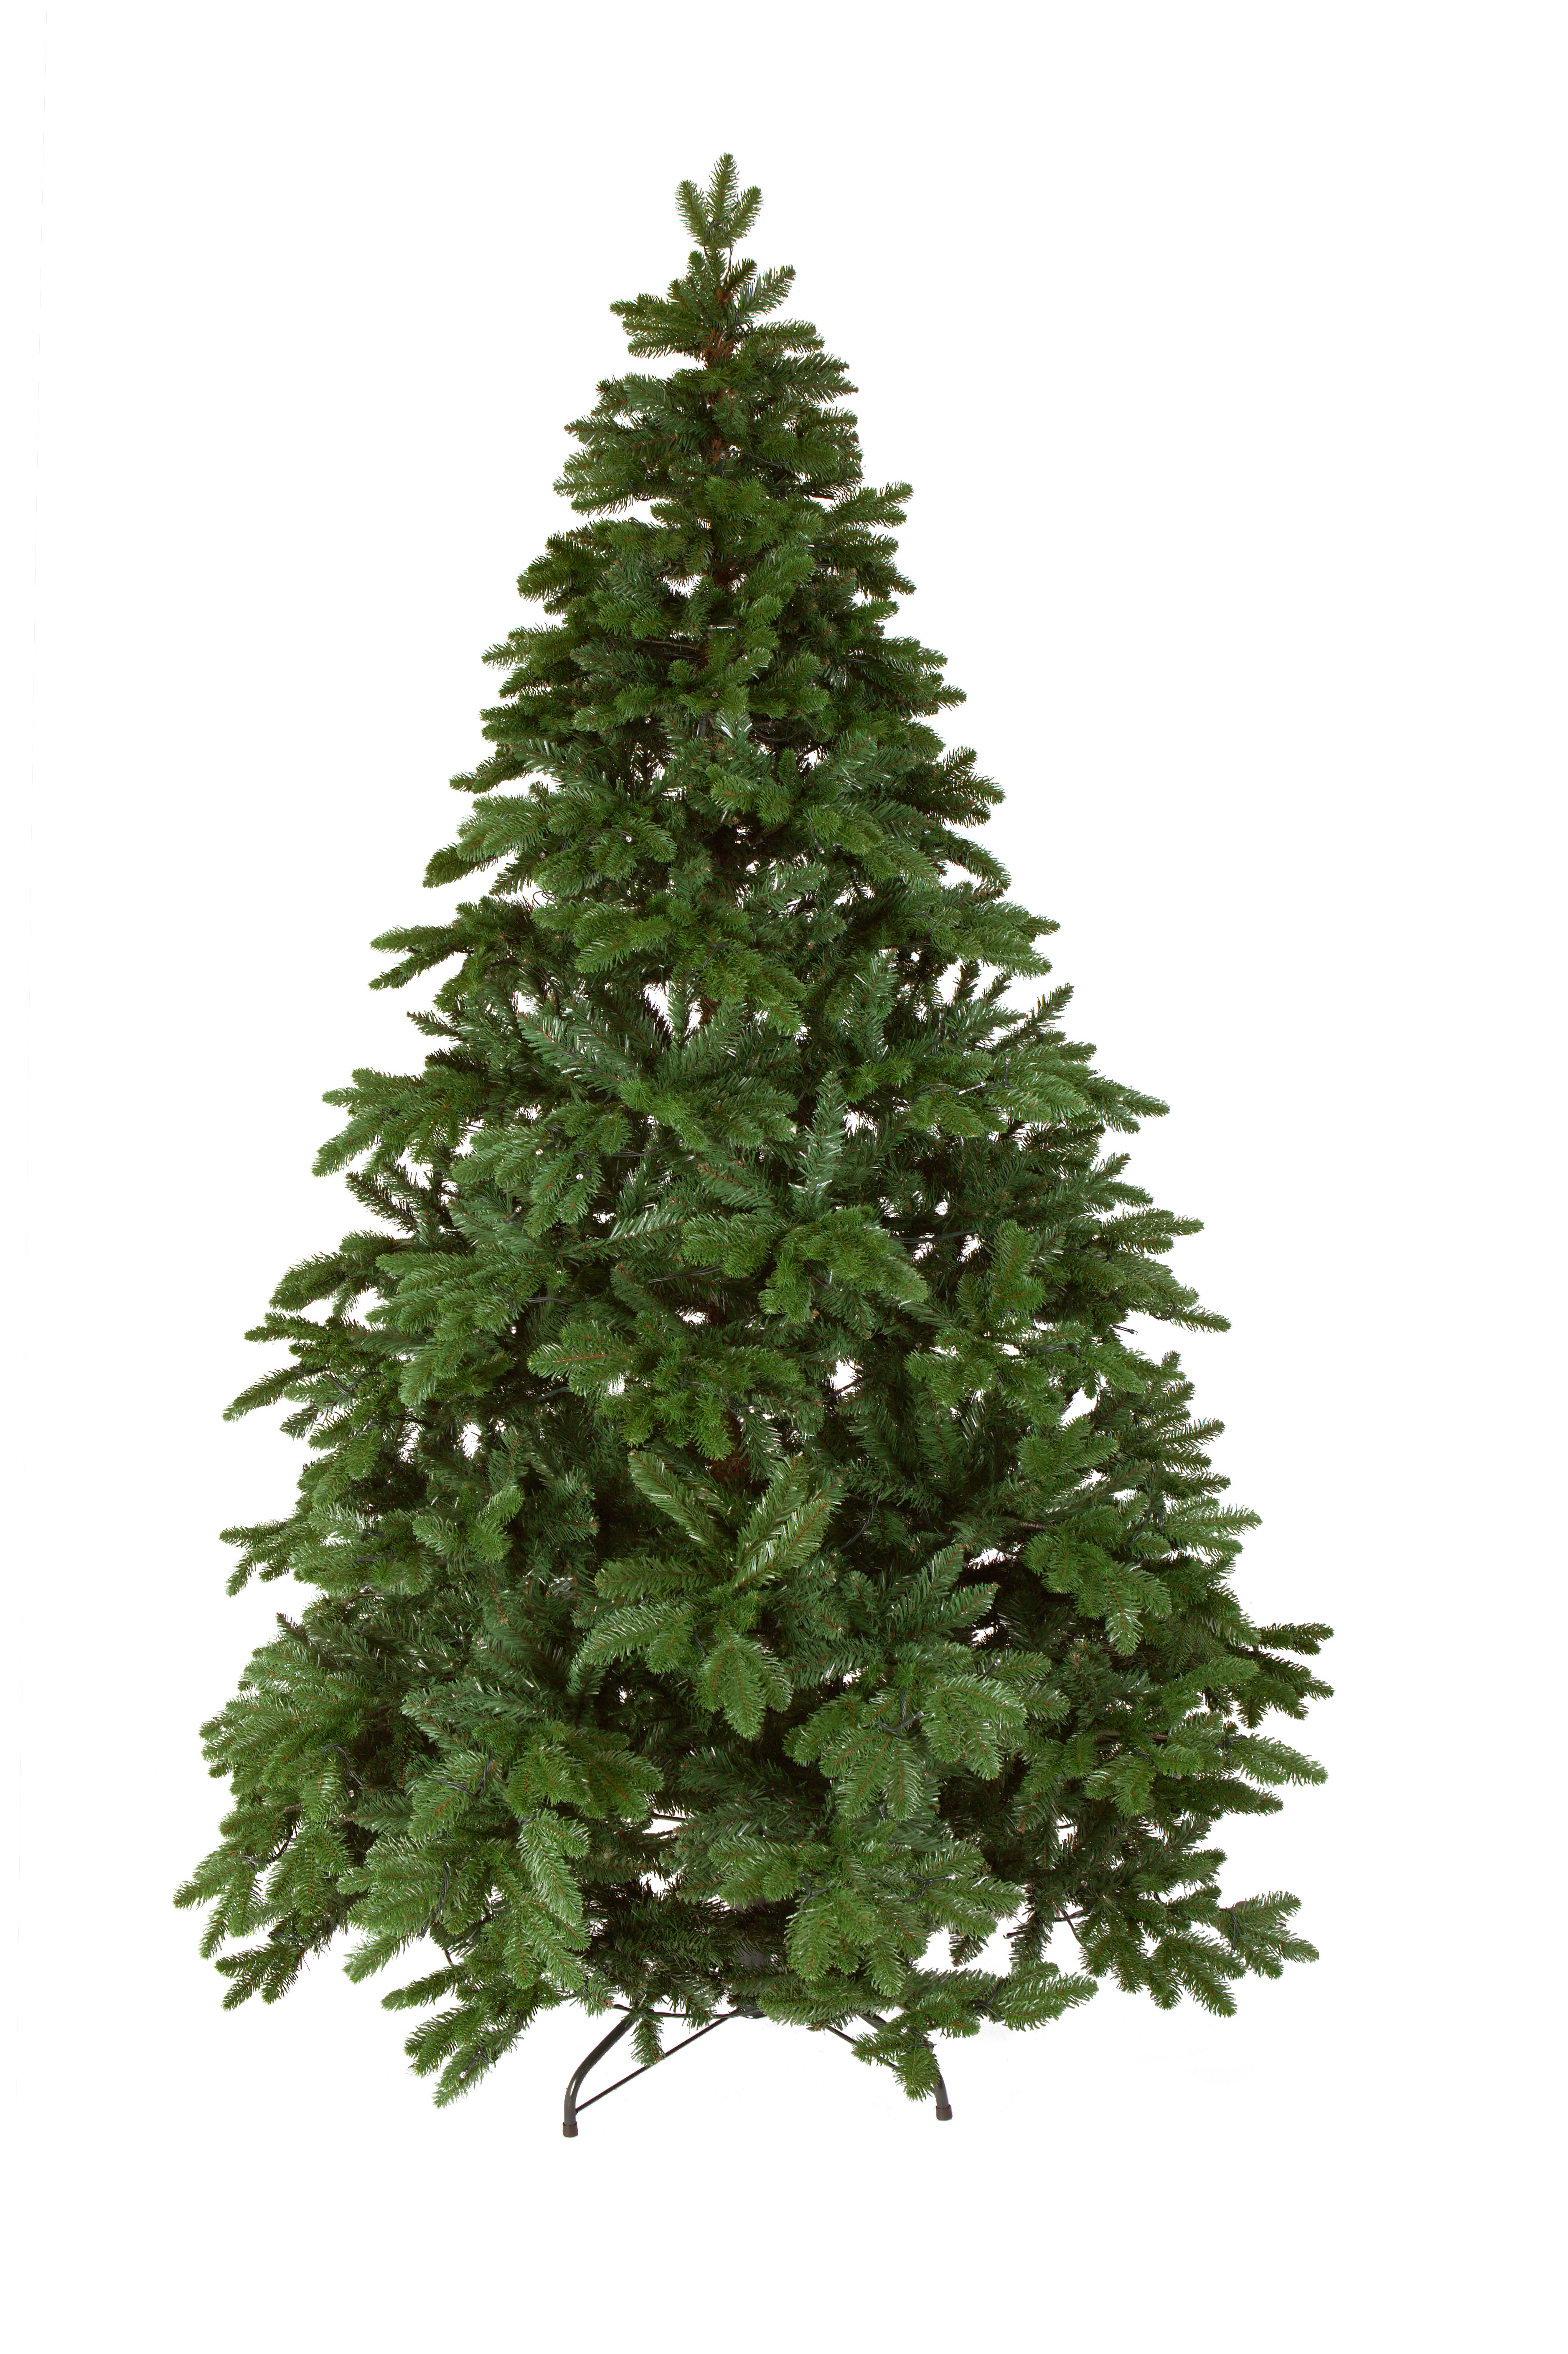 Premium Kerstboom Excellent Trees® LED Mantorp 150 cm met 190 Lampjes